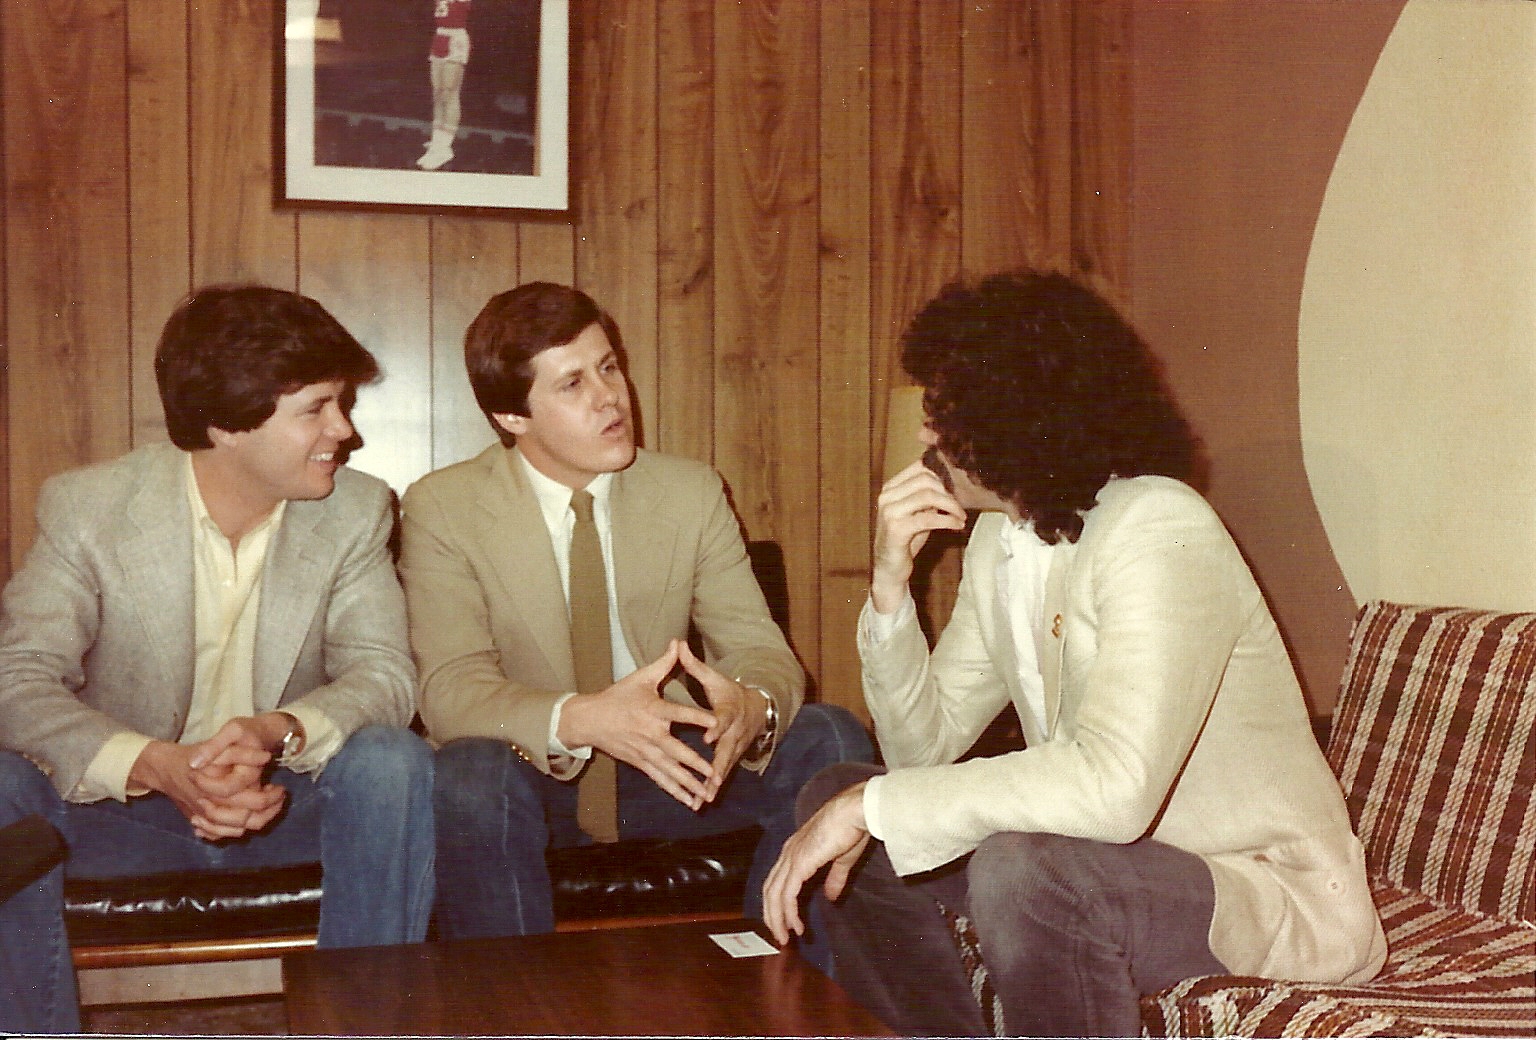 Ben McCain and Butch McCain interviewing Joe Bonsall of the Oak Ridge Boys for their morning TV show.